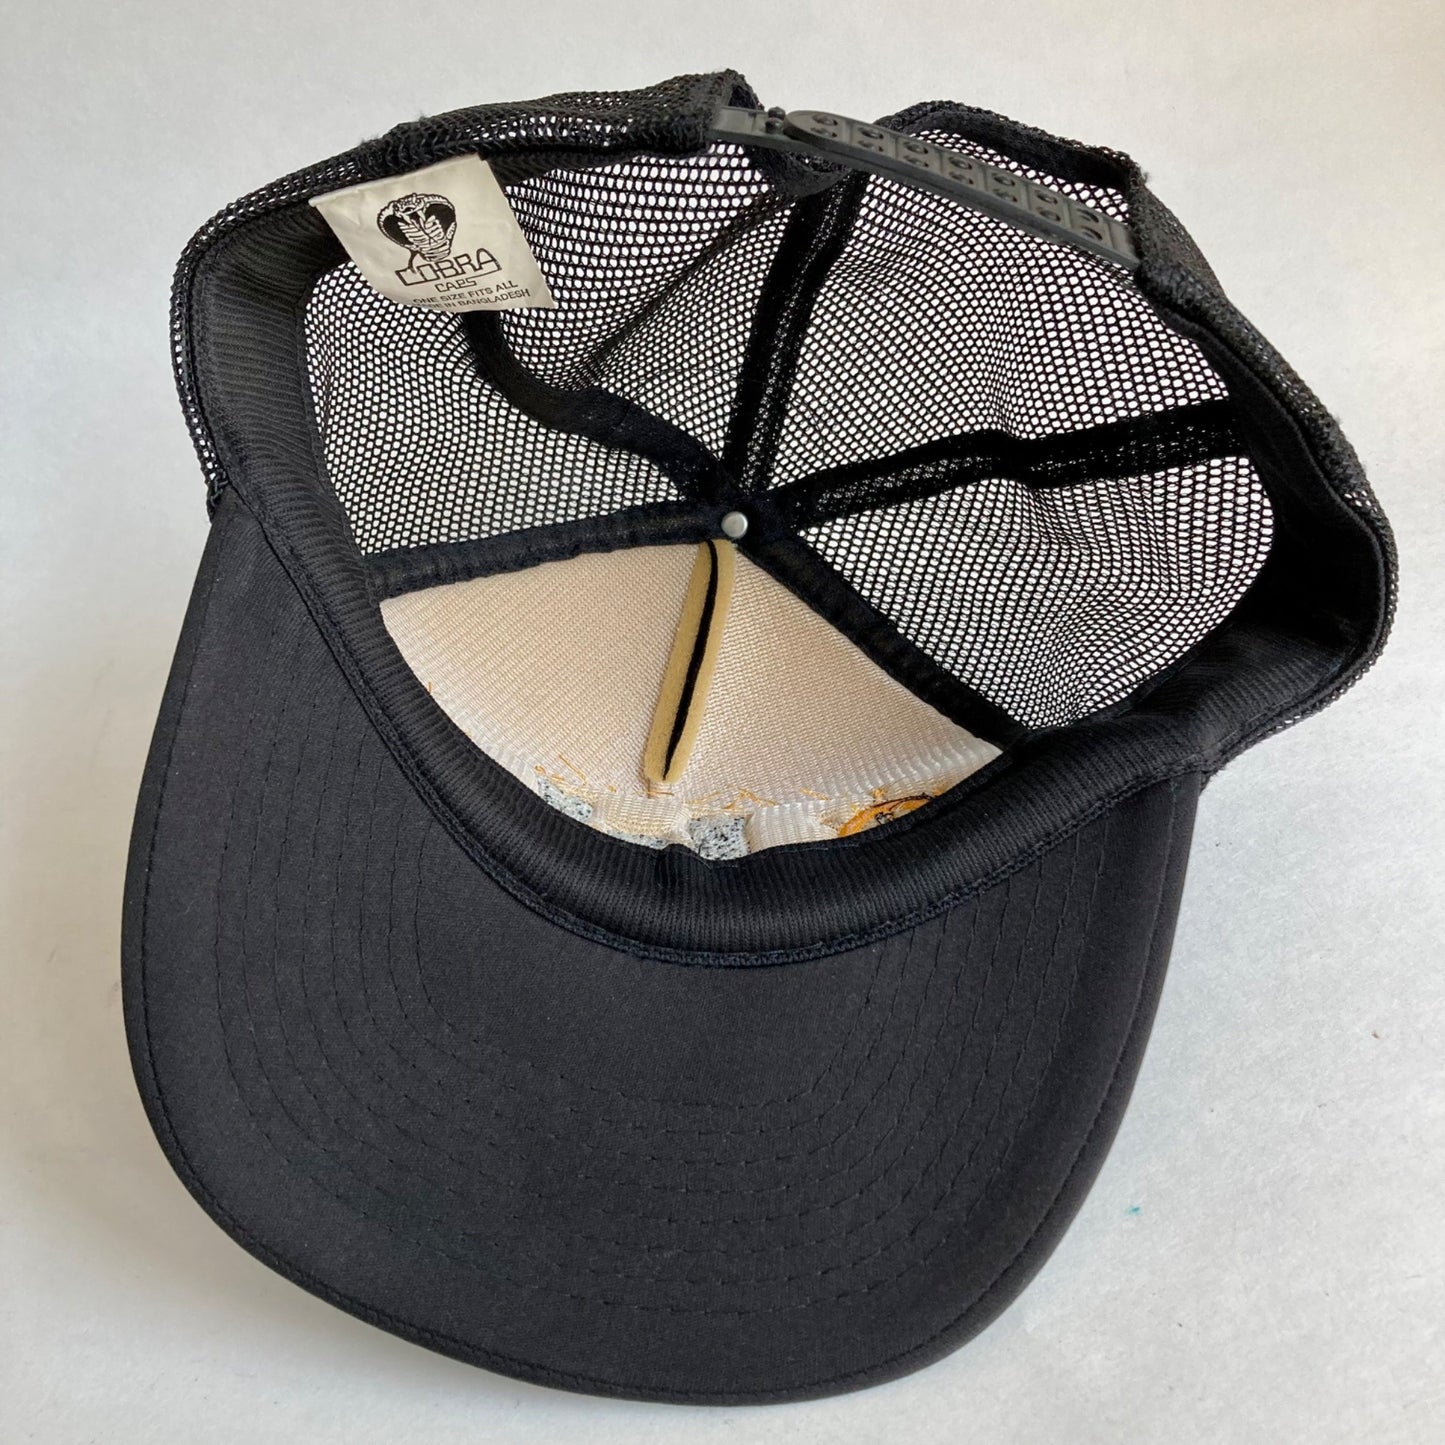 Vintage H.J. Schwartz Duluth Snapback Hat Black by Cobra Caps Army Barge